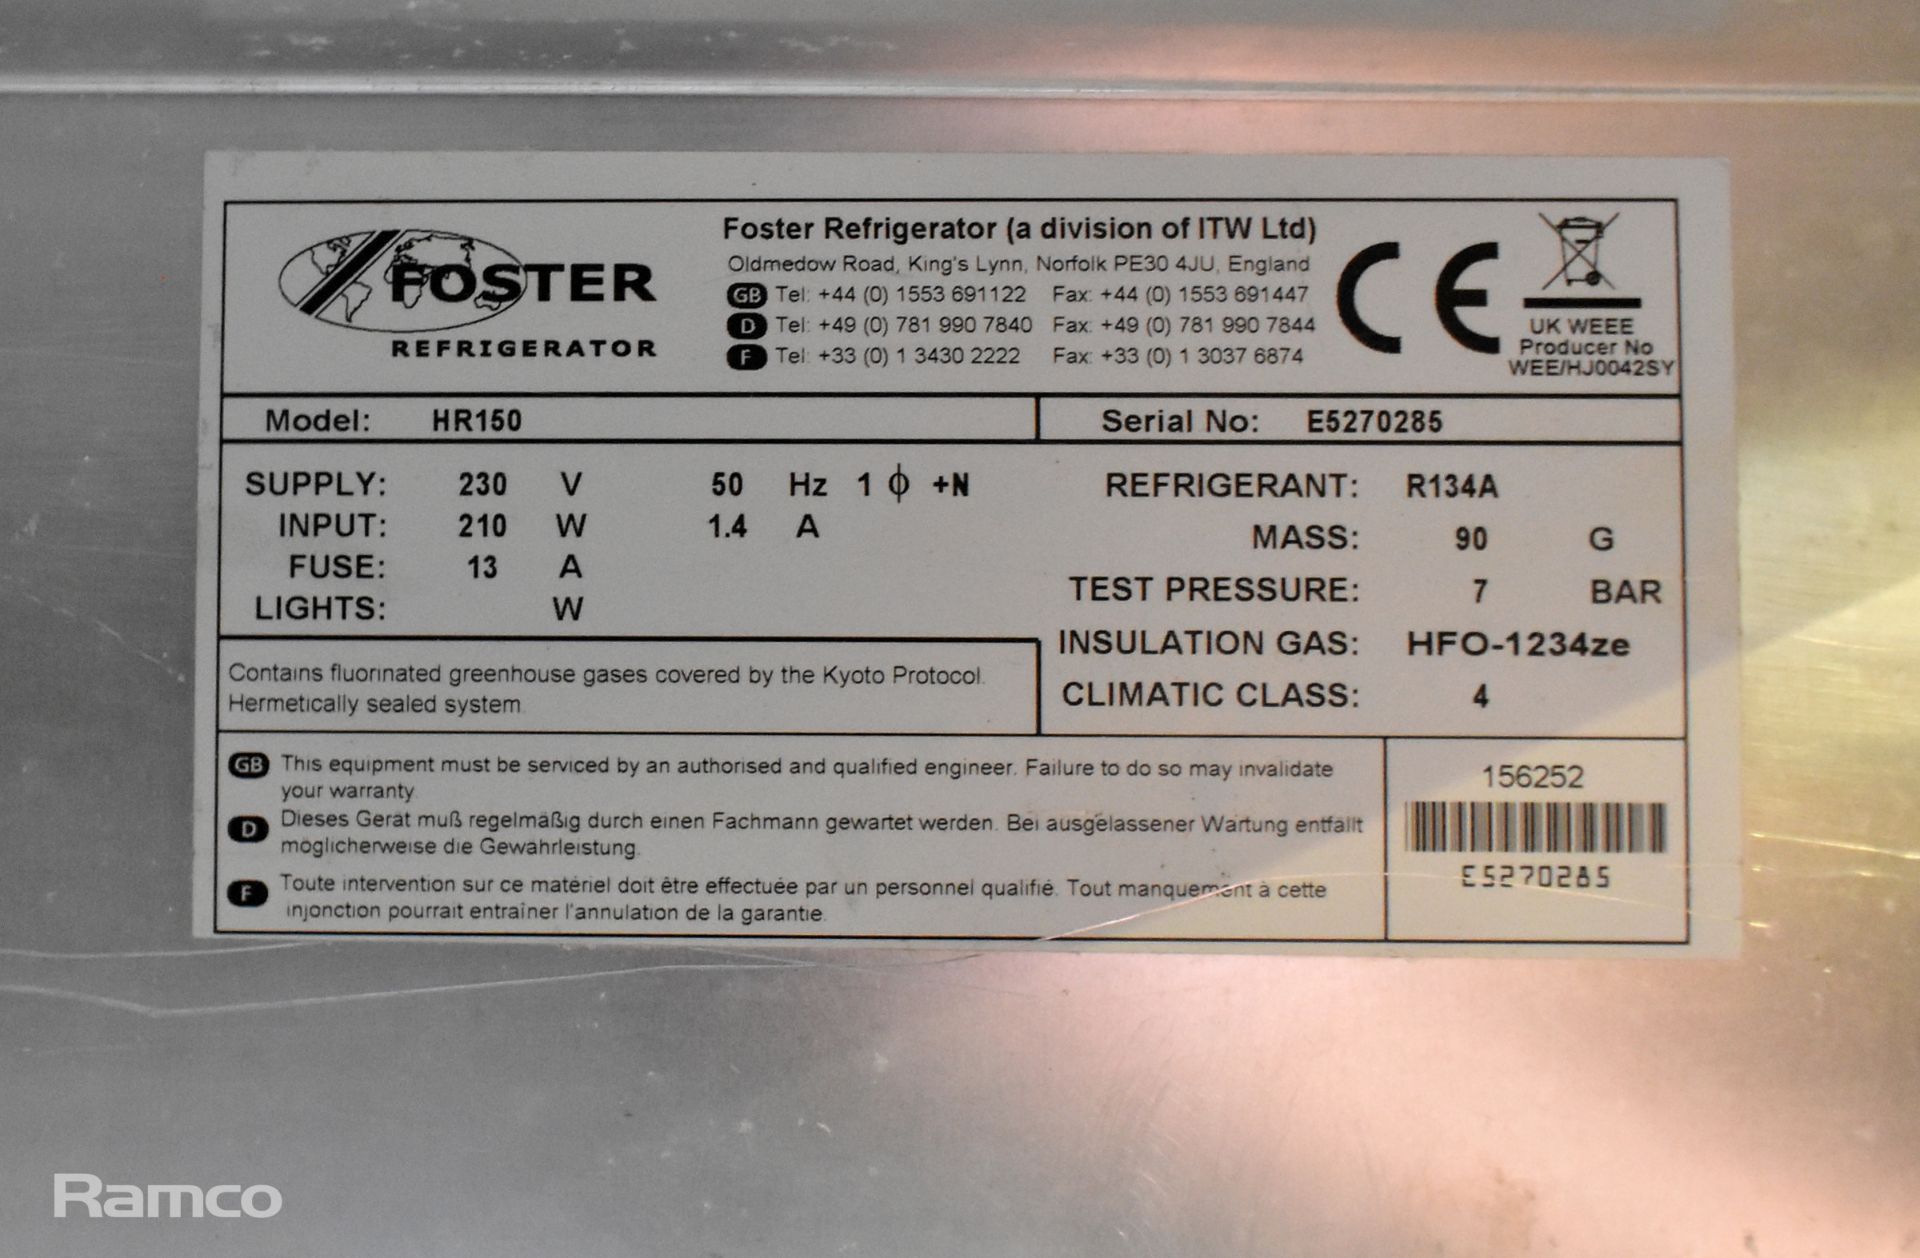 Foster HR150 stainless steel single door under counter fridge - W 605 x D 615 x H 830mm - Image 4 of 5